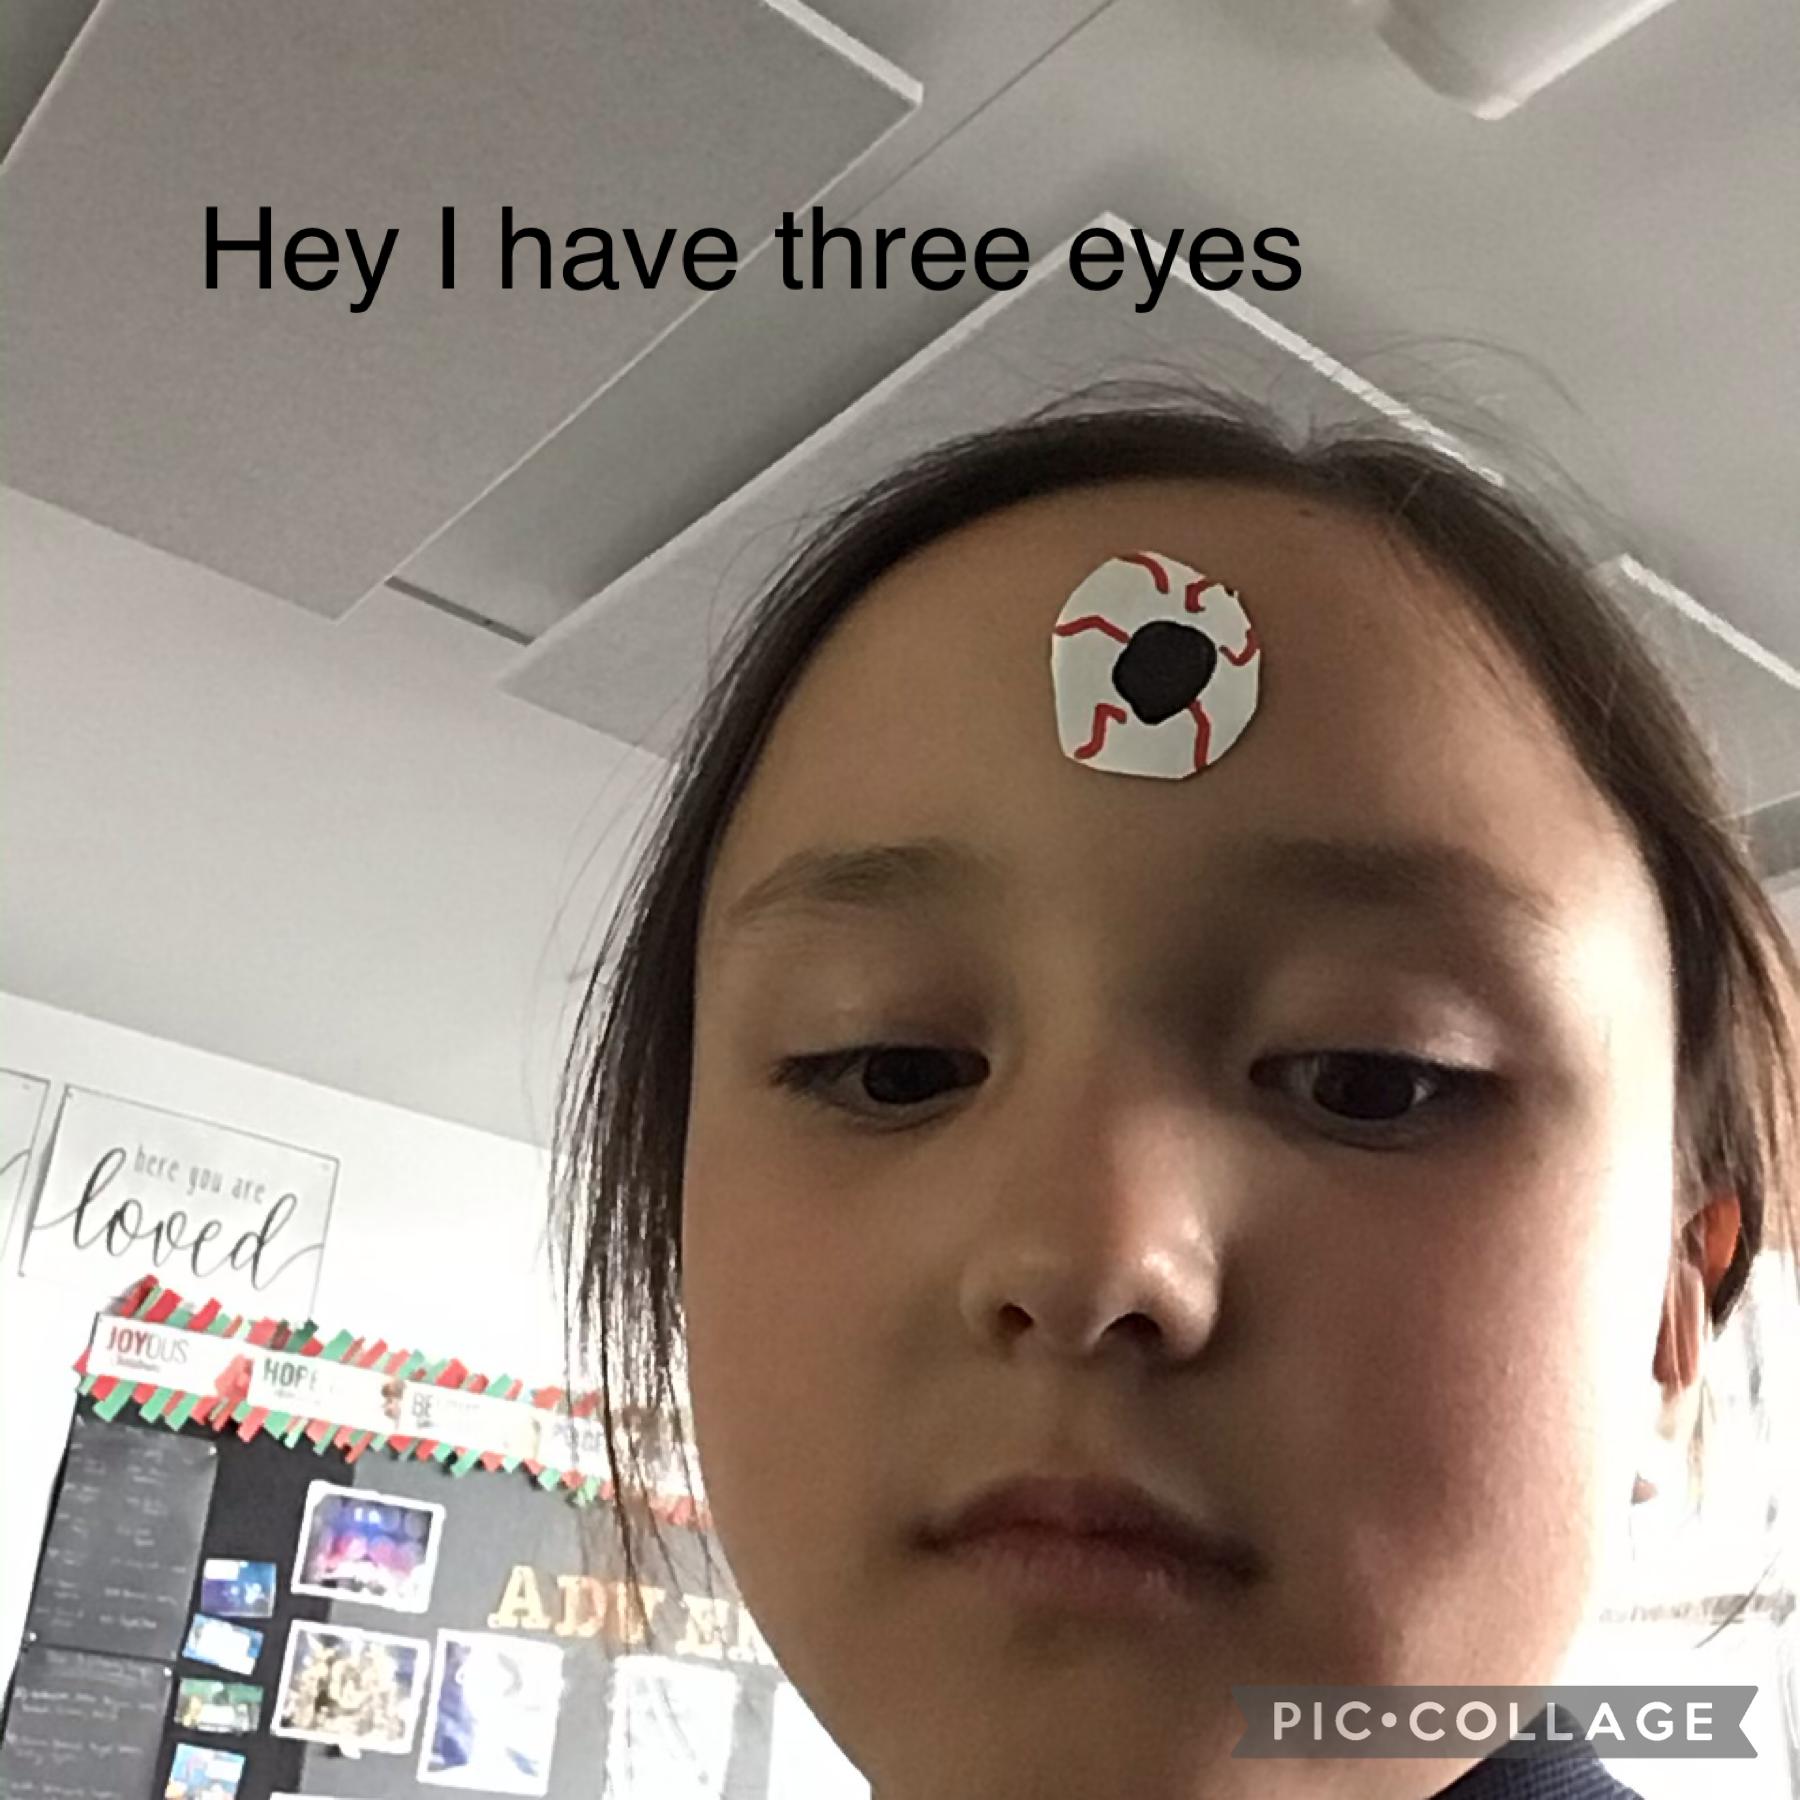 Hey tap
I have three eyes